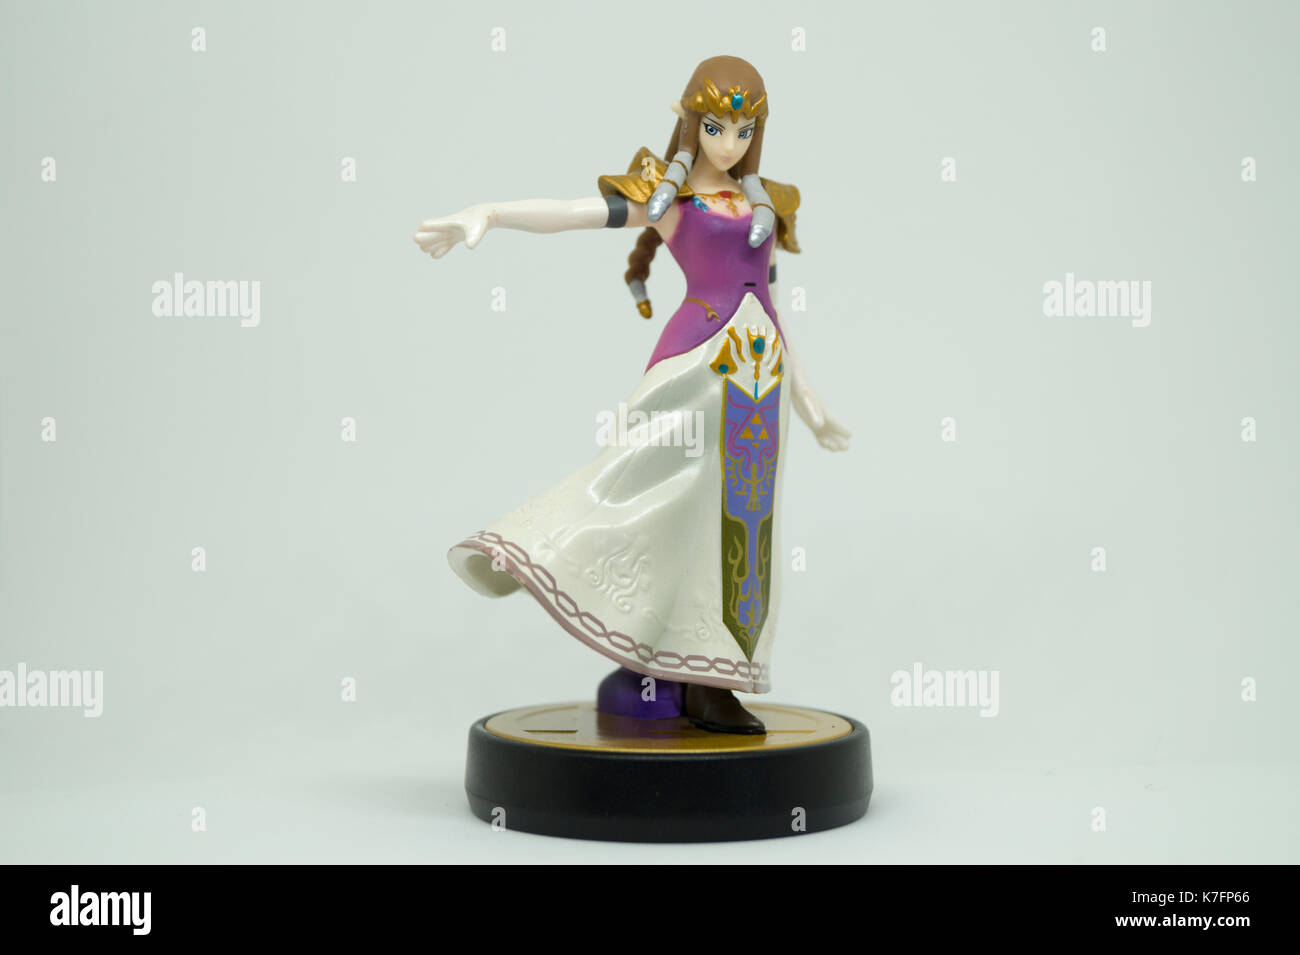 Nintendo Super Smash Bros Amiibo Collection Figure Zelda Stock Photo - Alamy